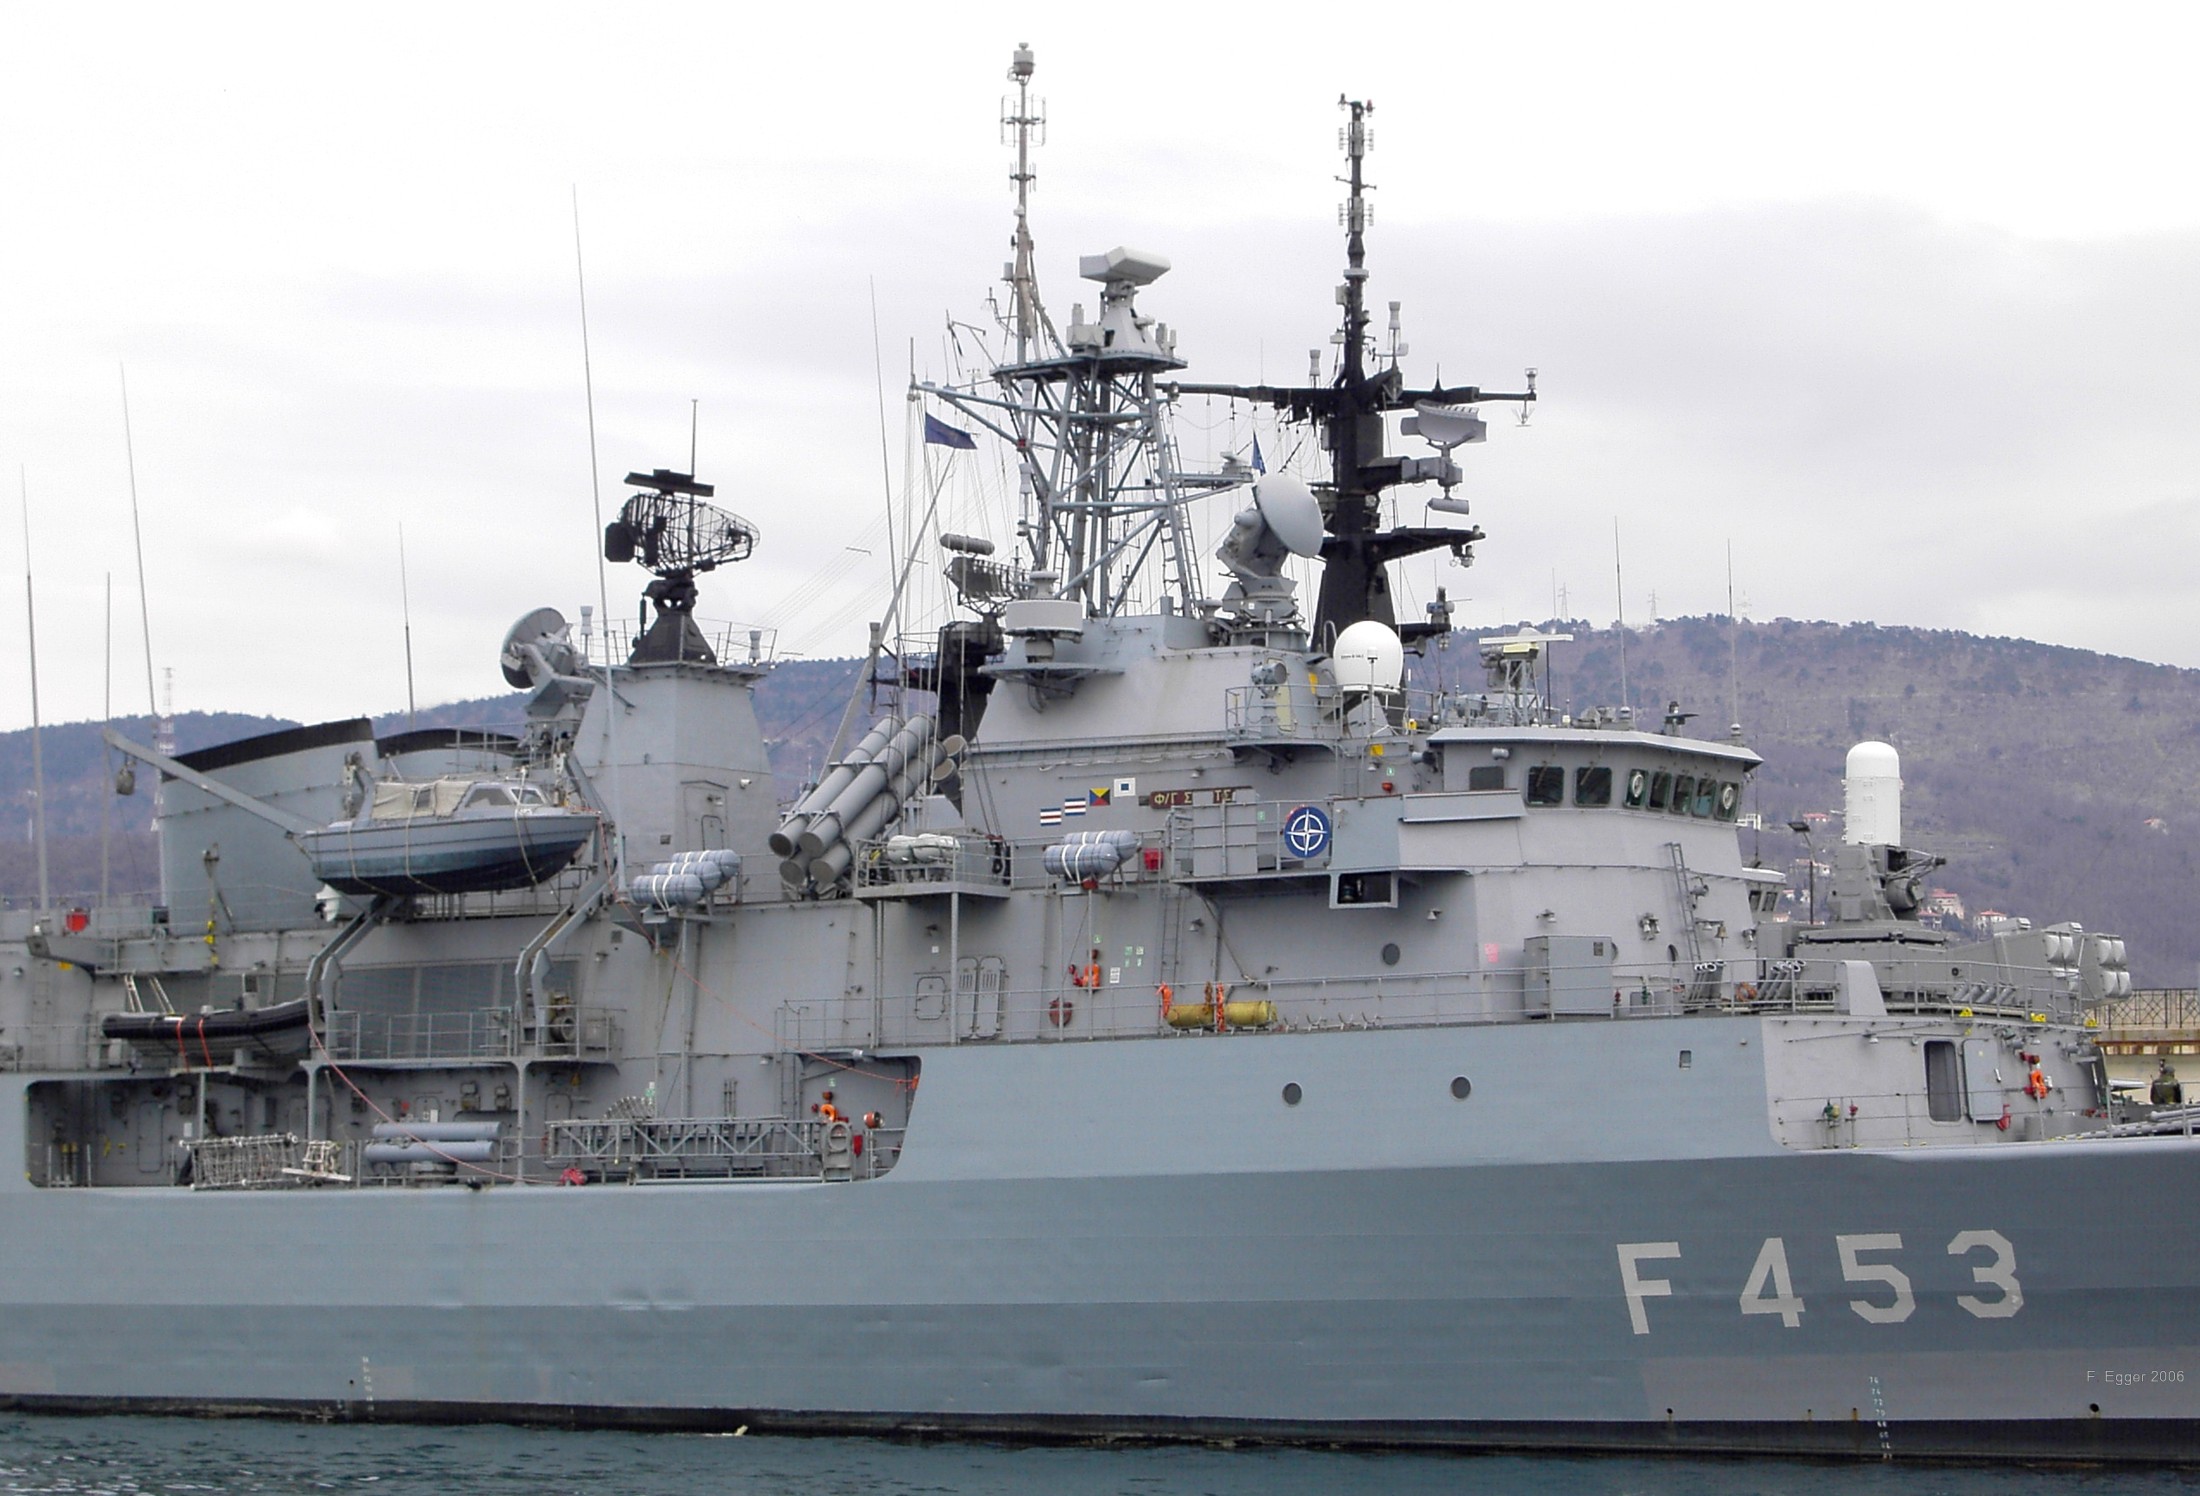 f 453 hs spetsai hydra class frigate meko-200hn hellenic navy greece standing nato response force maritime group 2 snmg-2 trieste italy 2006 10